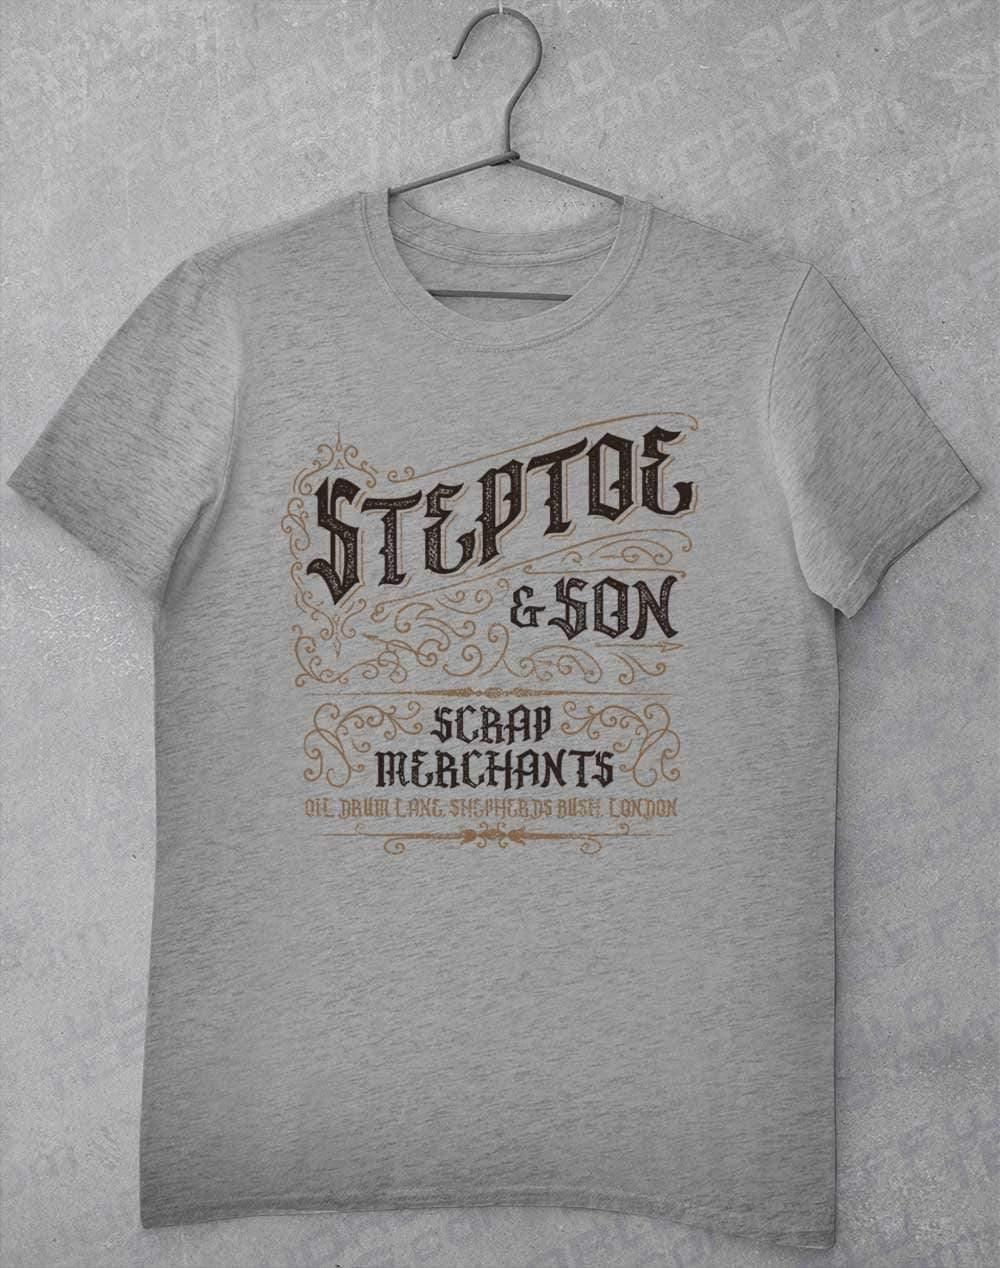 Steptoe & Son Scrap Merchants T-Shirt S / Heather Grey  - Off World Tees